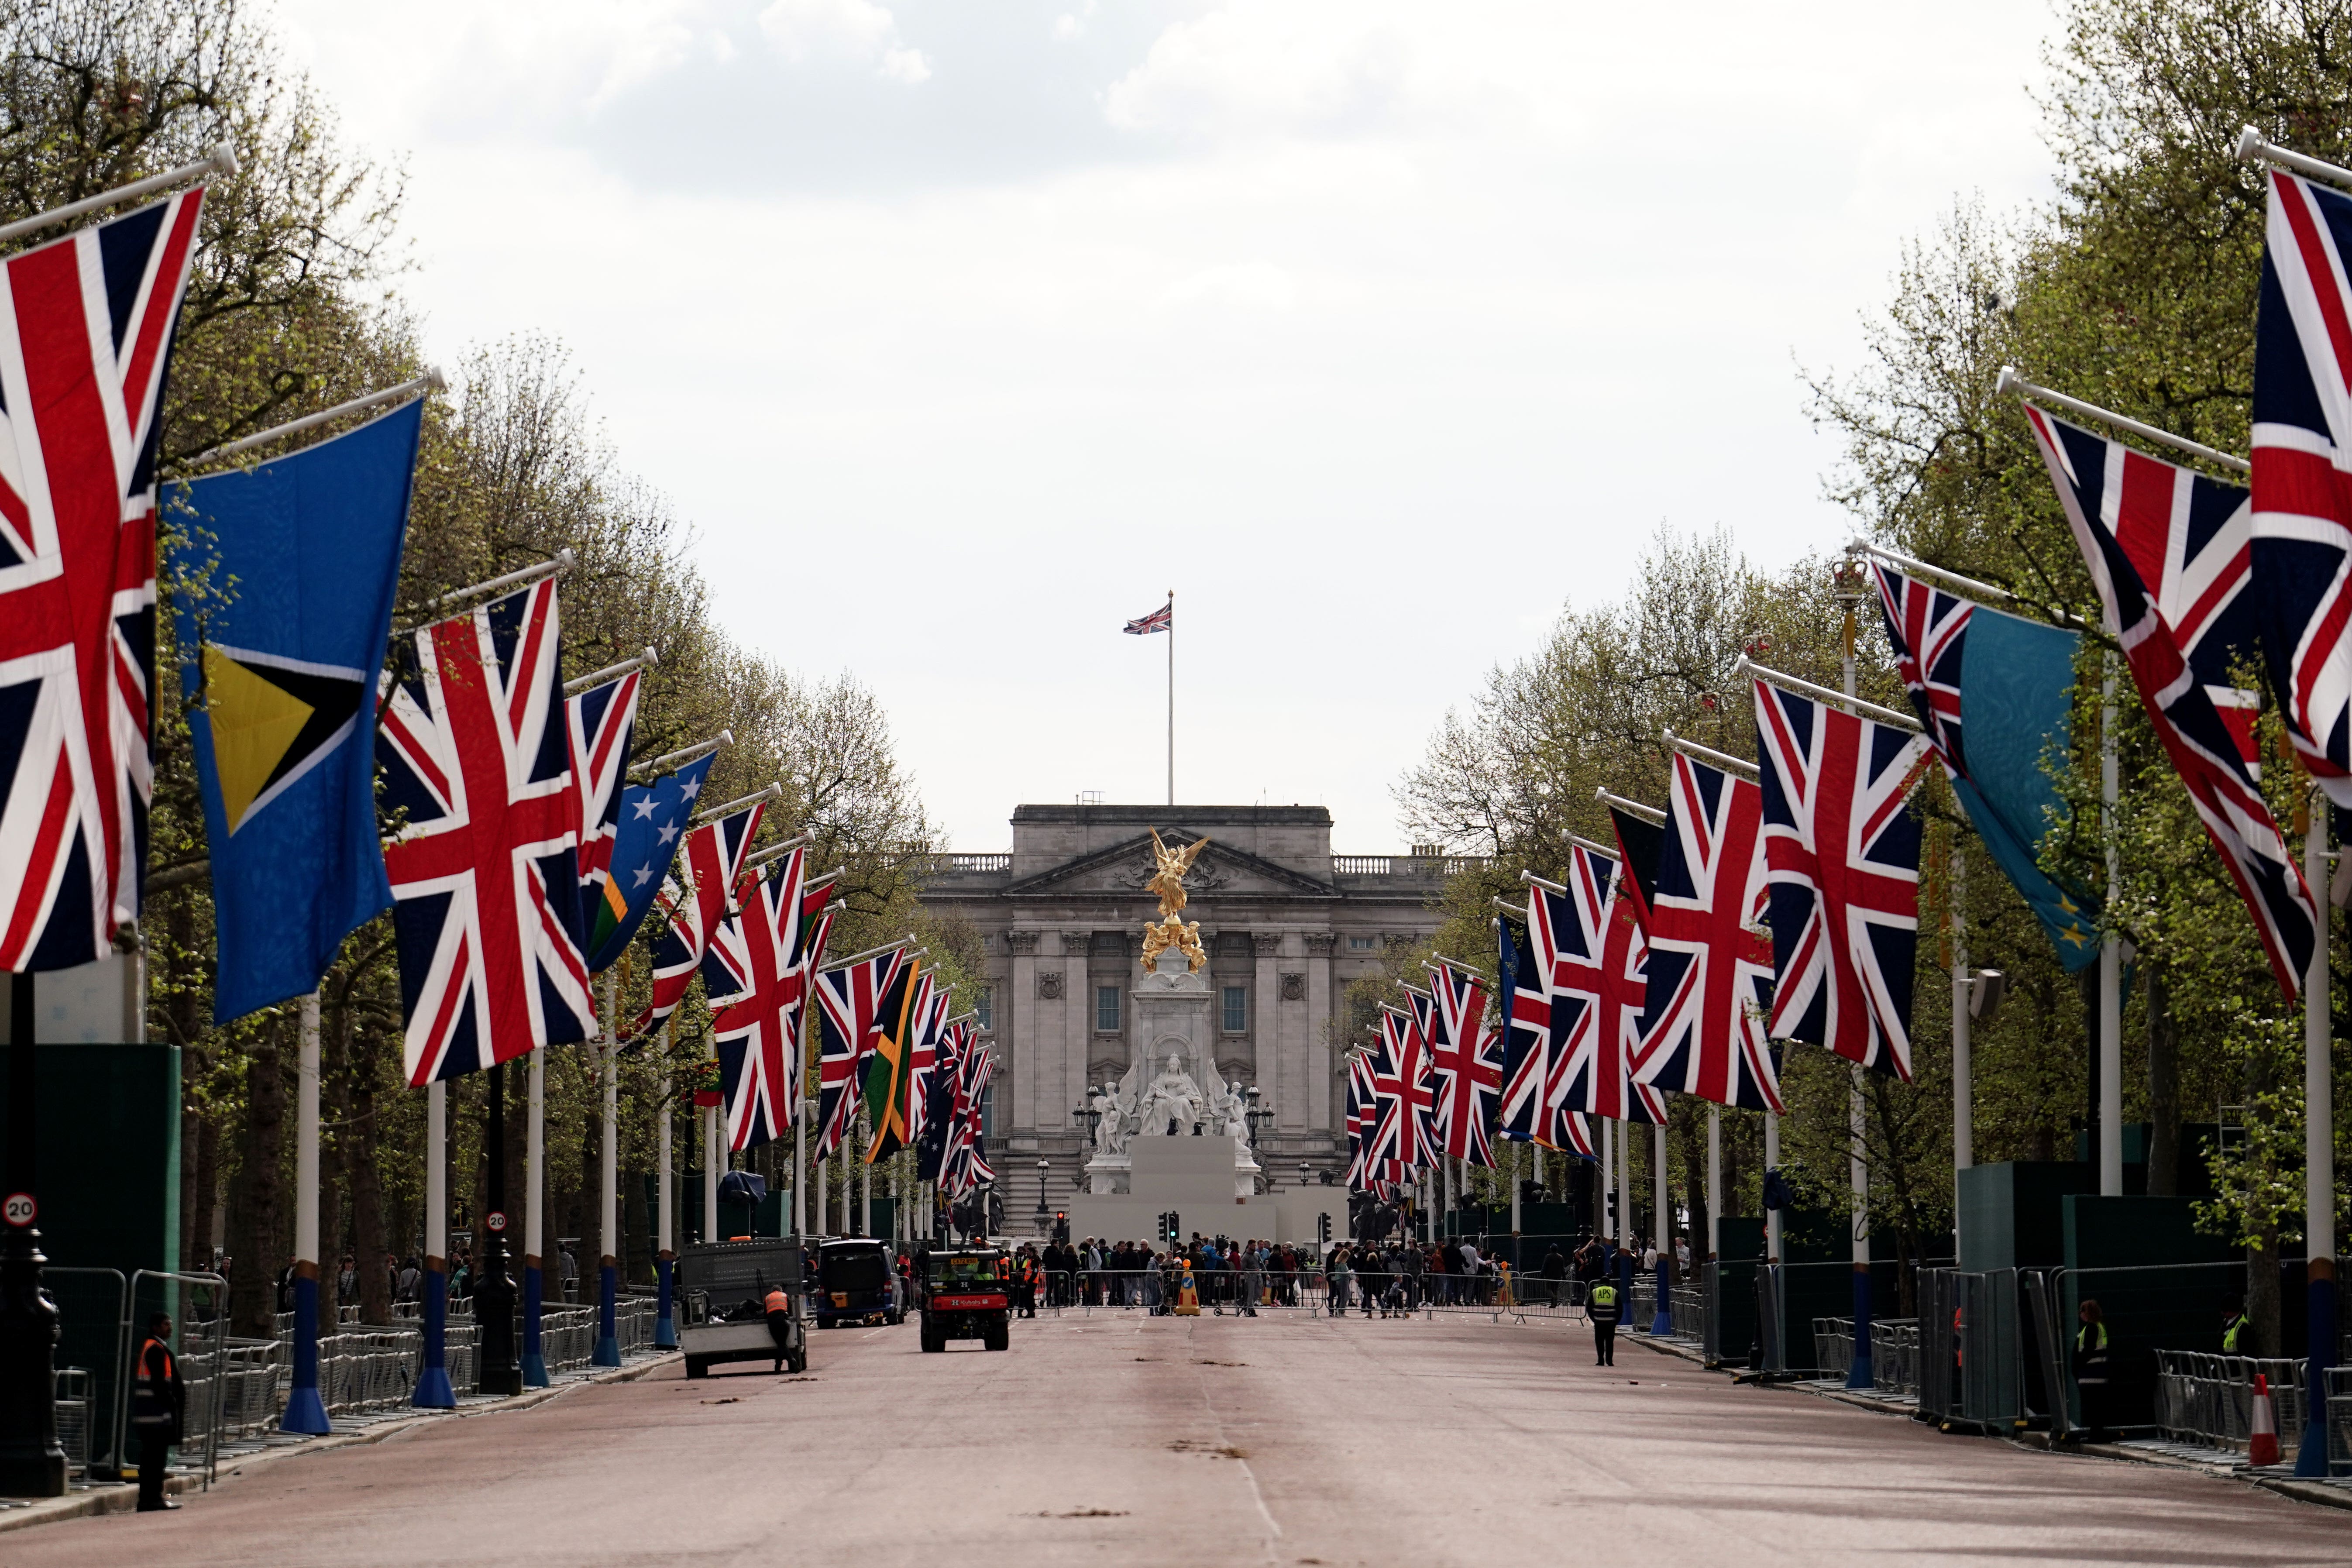 Union flags hang outside Buckingham Palace on the Mall (Jordan Pettitt/PA)